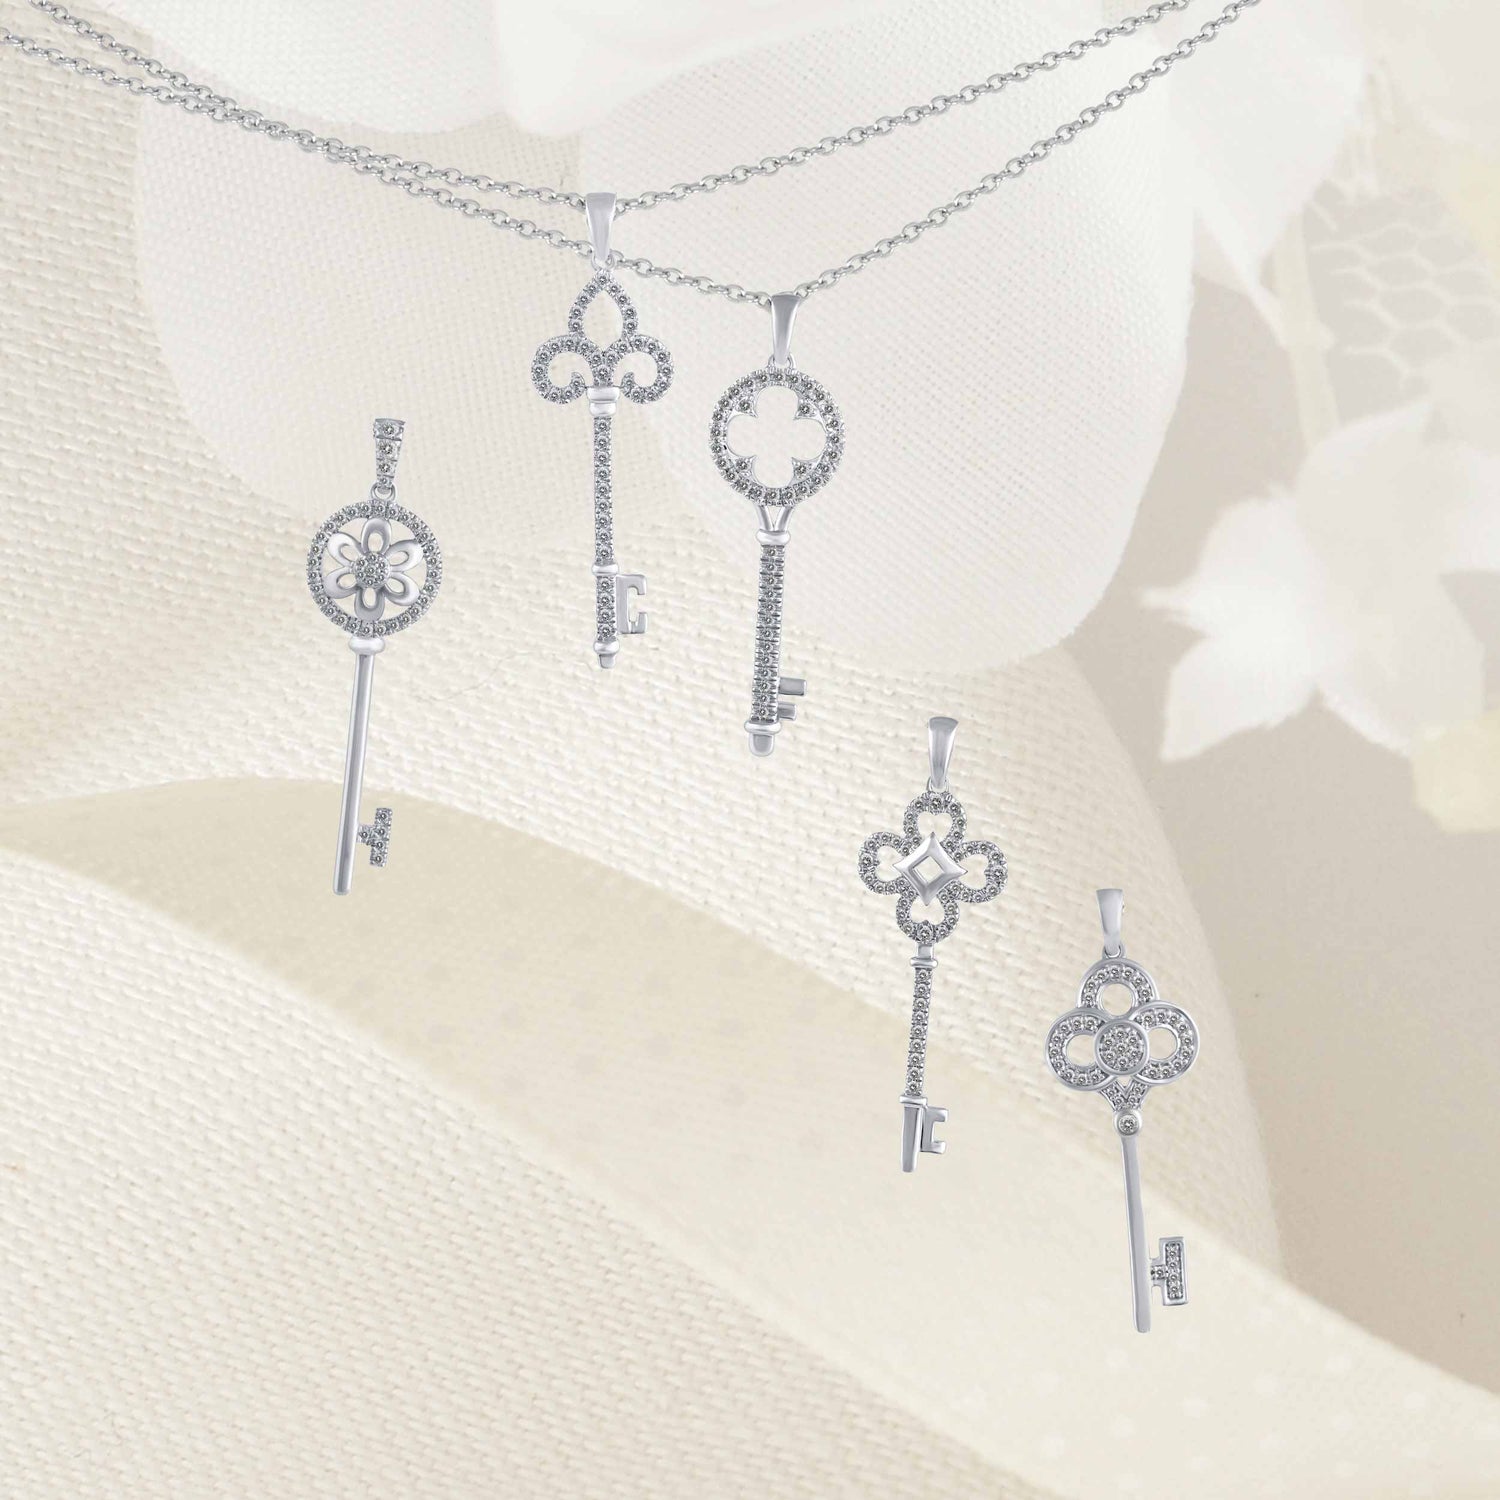 Best Tiffany Keys Round Star Key Pendant Yellow Diamond For Tiffany & Co.  Necklace & Pendant